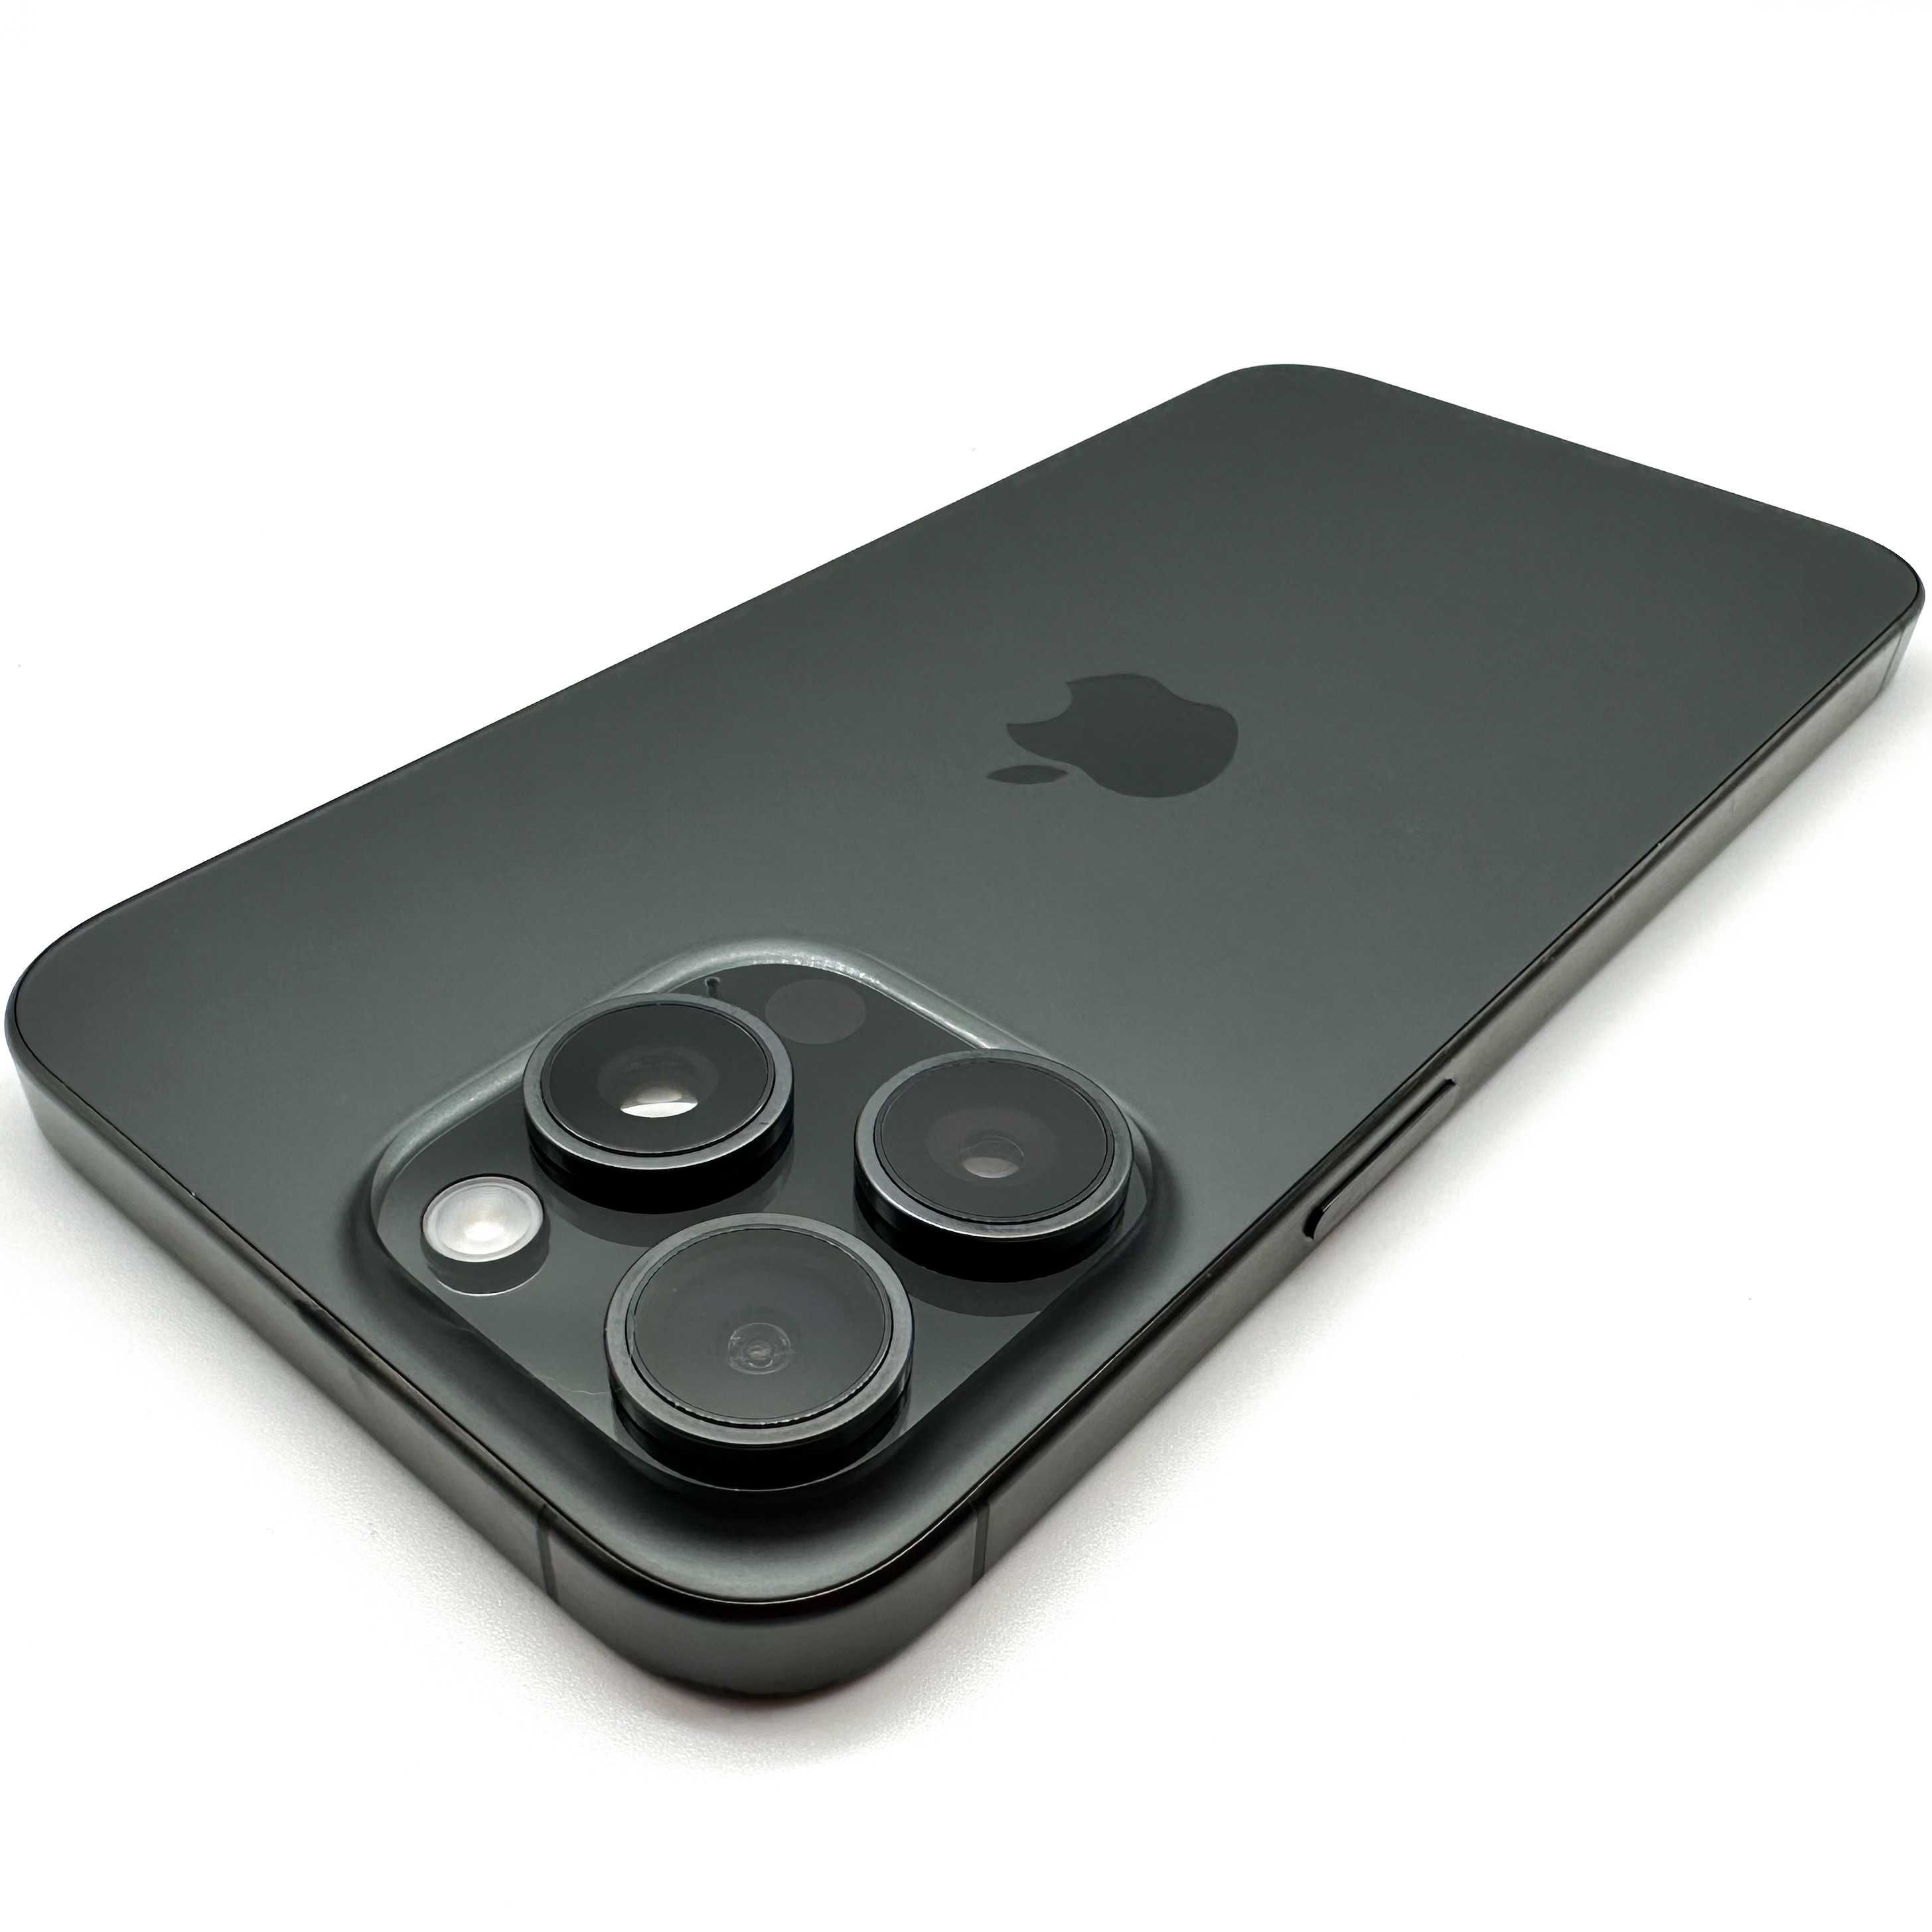 iPhone 15 Pro Max 256gb Tytan Naturalny 4900zł bateria 100% Żelazna 89